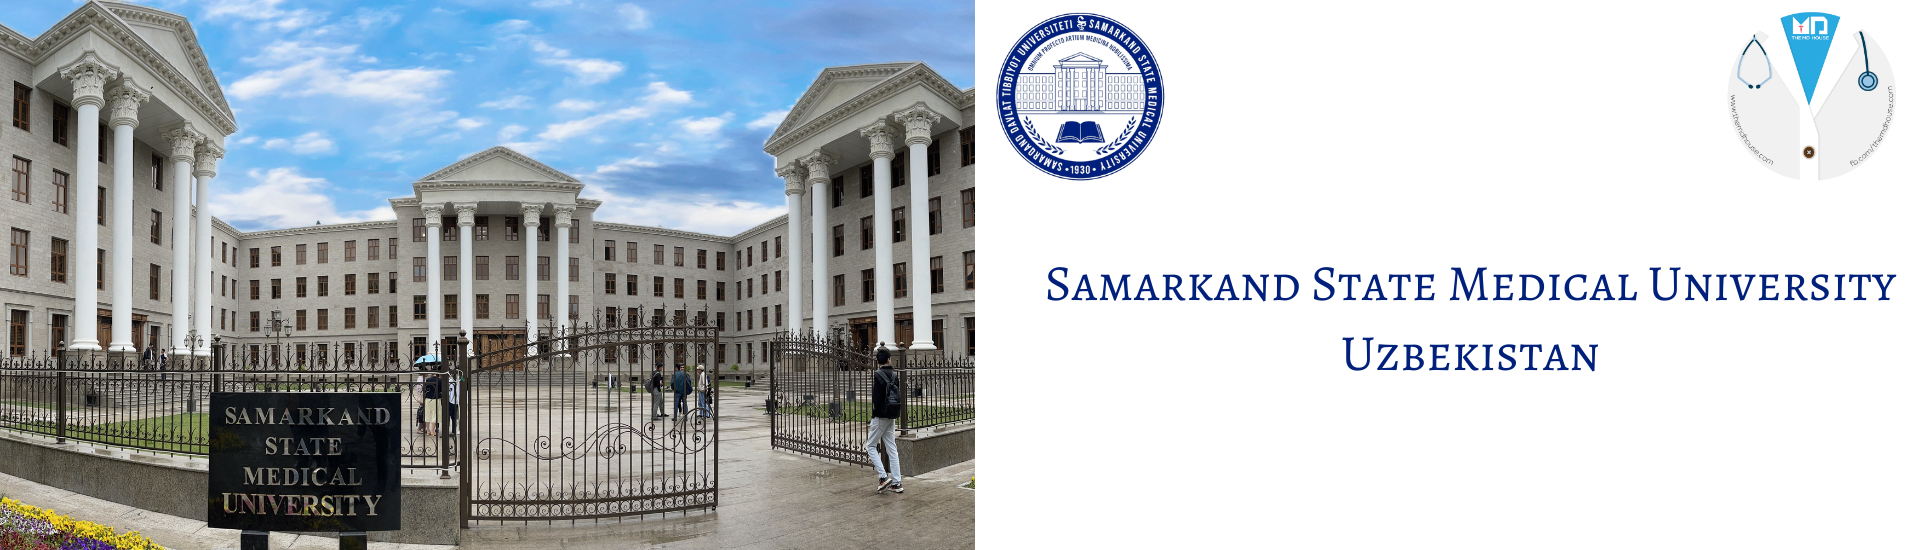 Samarkand State Medical University in Uzbekistan